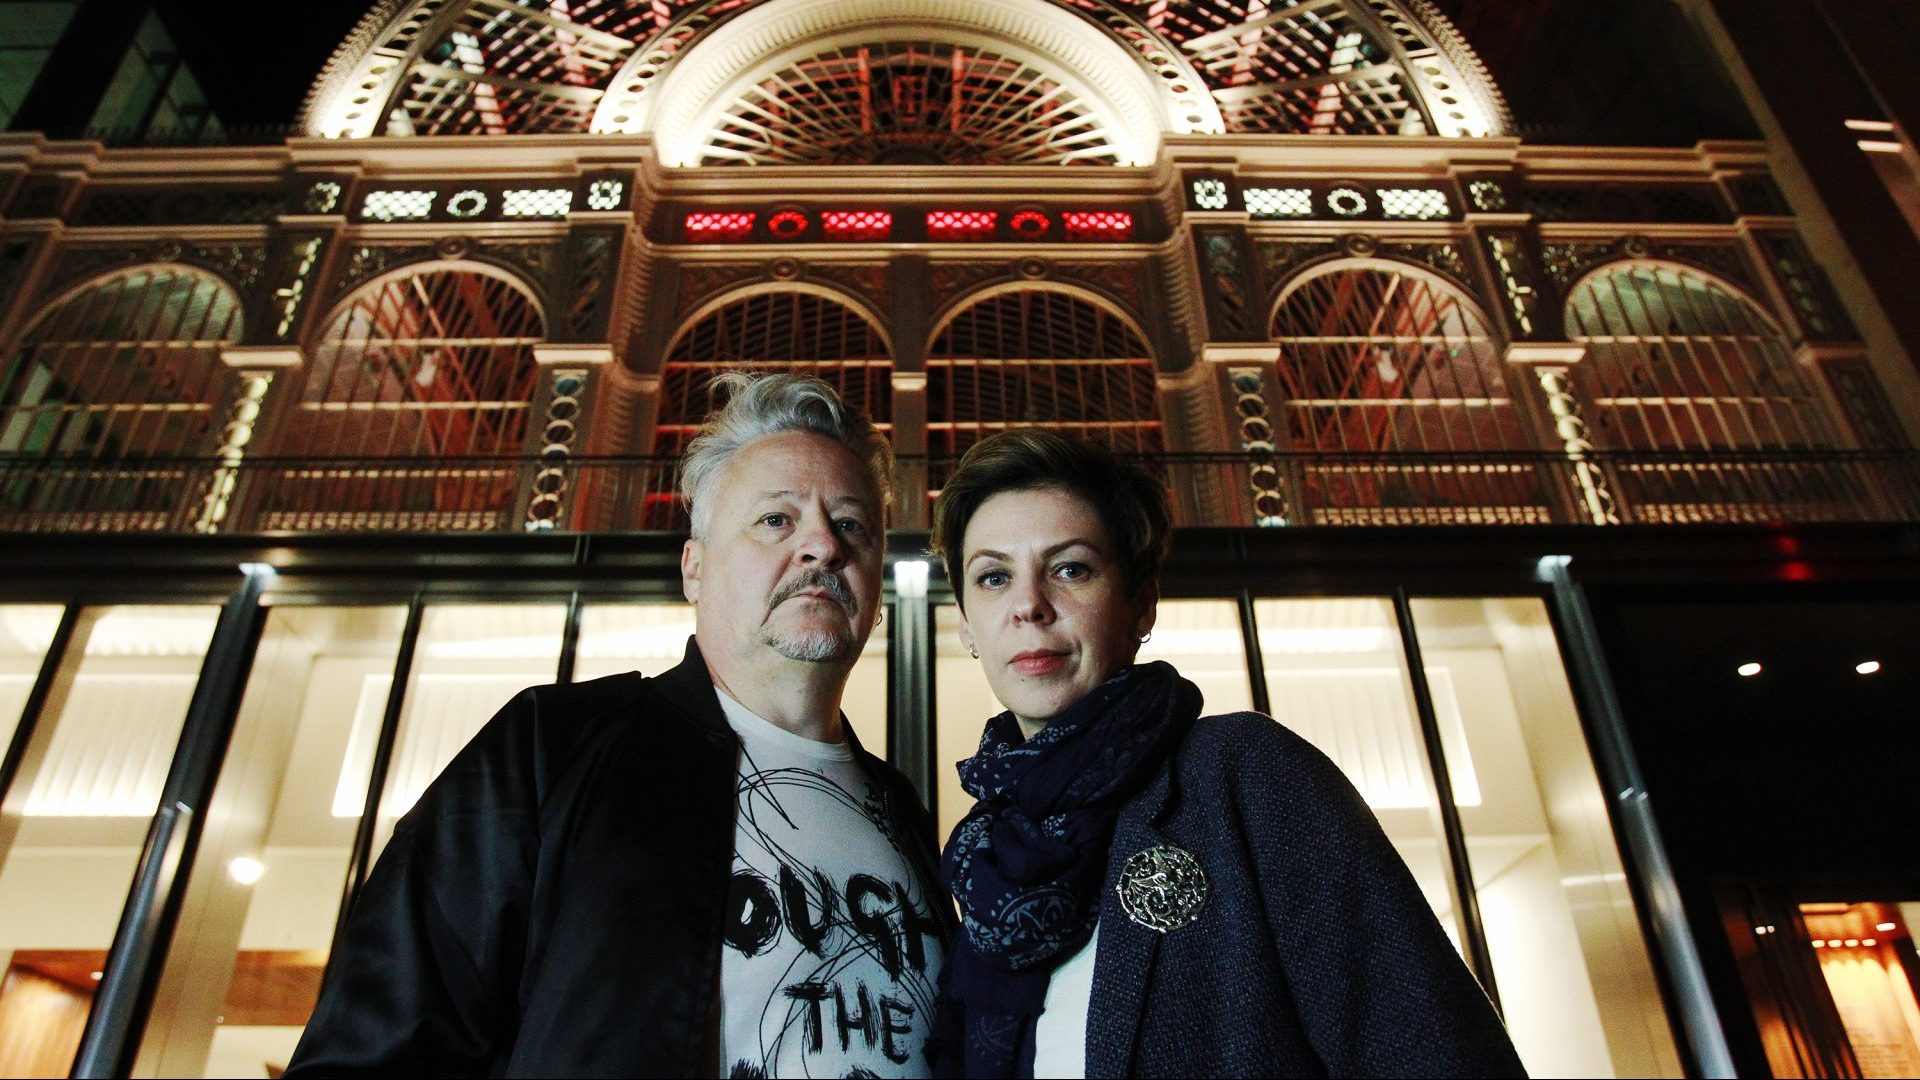 Nicolai Khalezin and Natalia Koliada outside the Royal 
Opera House, London
Photo: Marilyn Kingwill